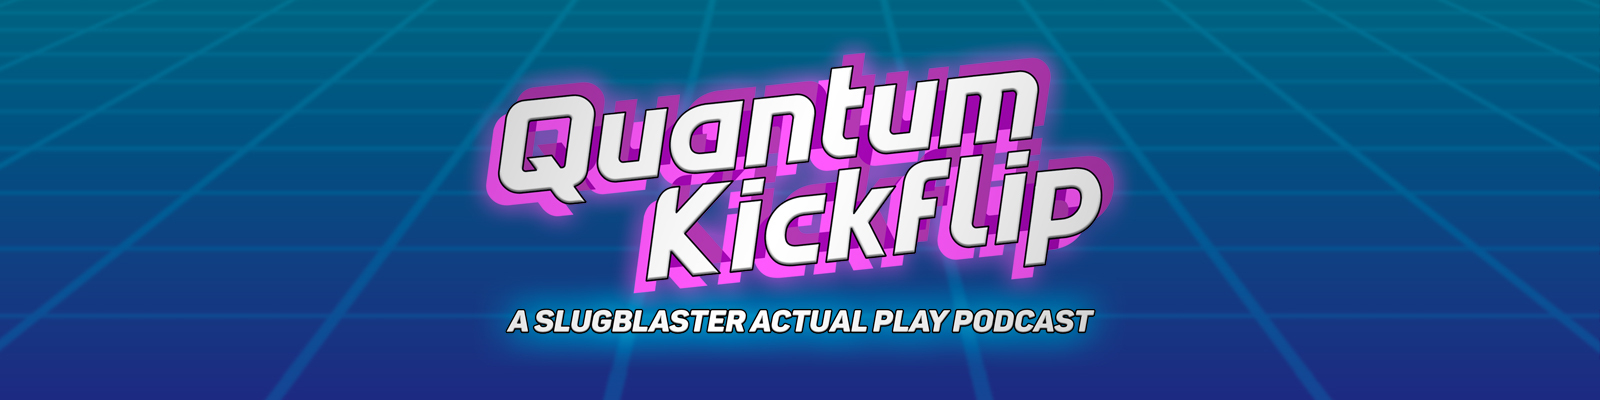 Quantum Kickflip